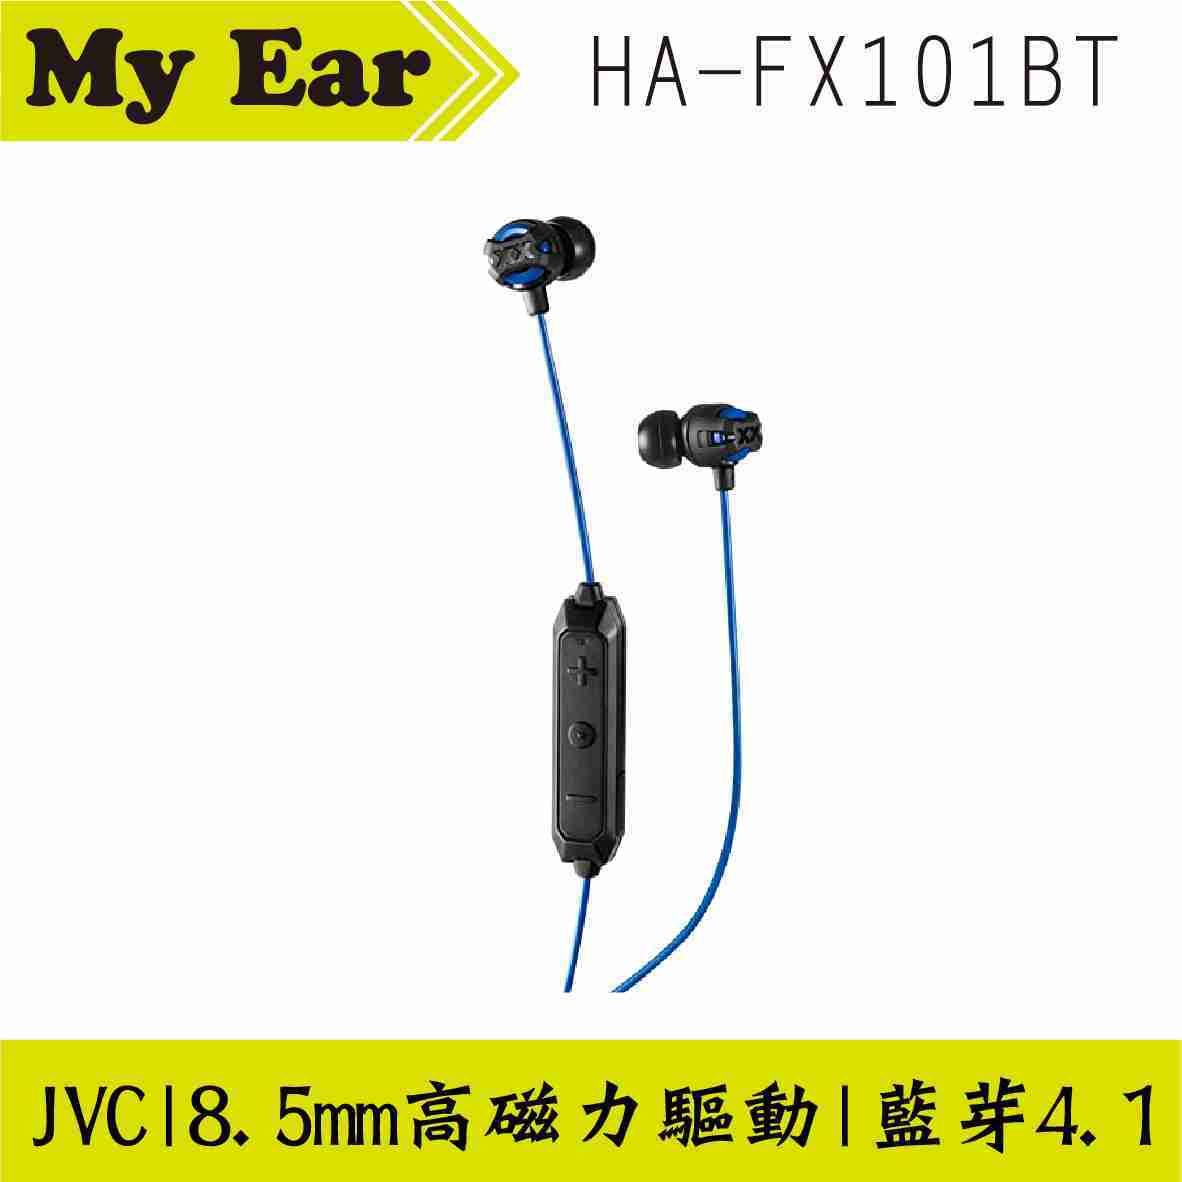 JVC HA-FX101BT 三色可選 支援藍芽4.1 高磁力驅動8.5mm 無線耳機 | My Ear耳機專門店